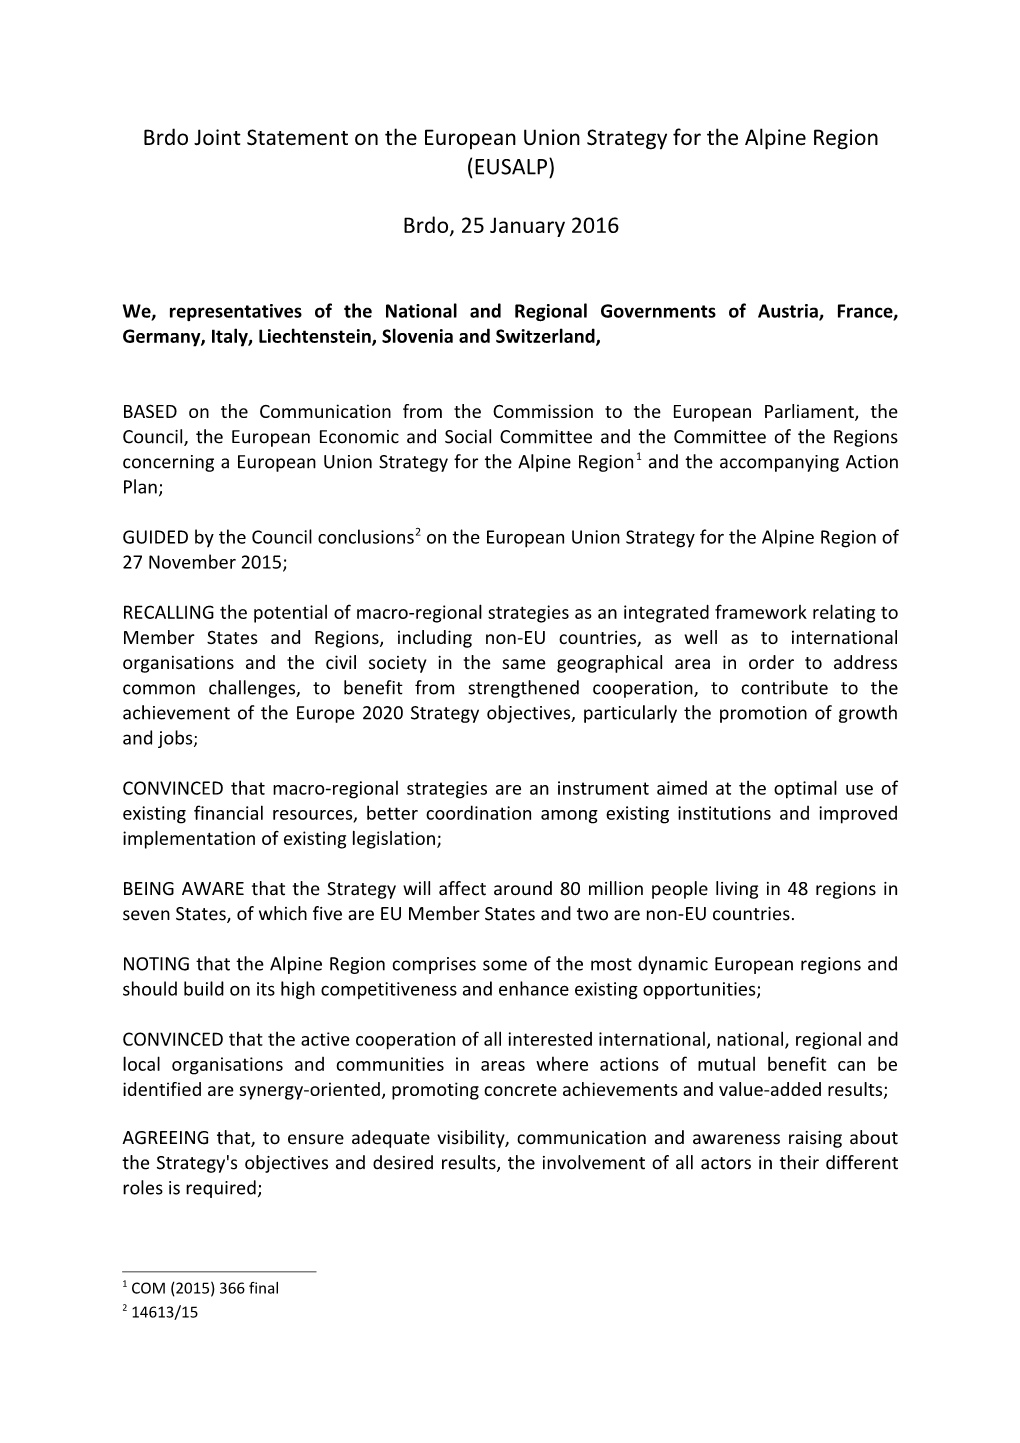 Slovenia Joint Statement on the European Union Strategy for the Alpine Region (EUSALP)